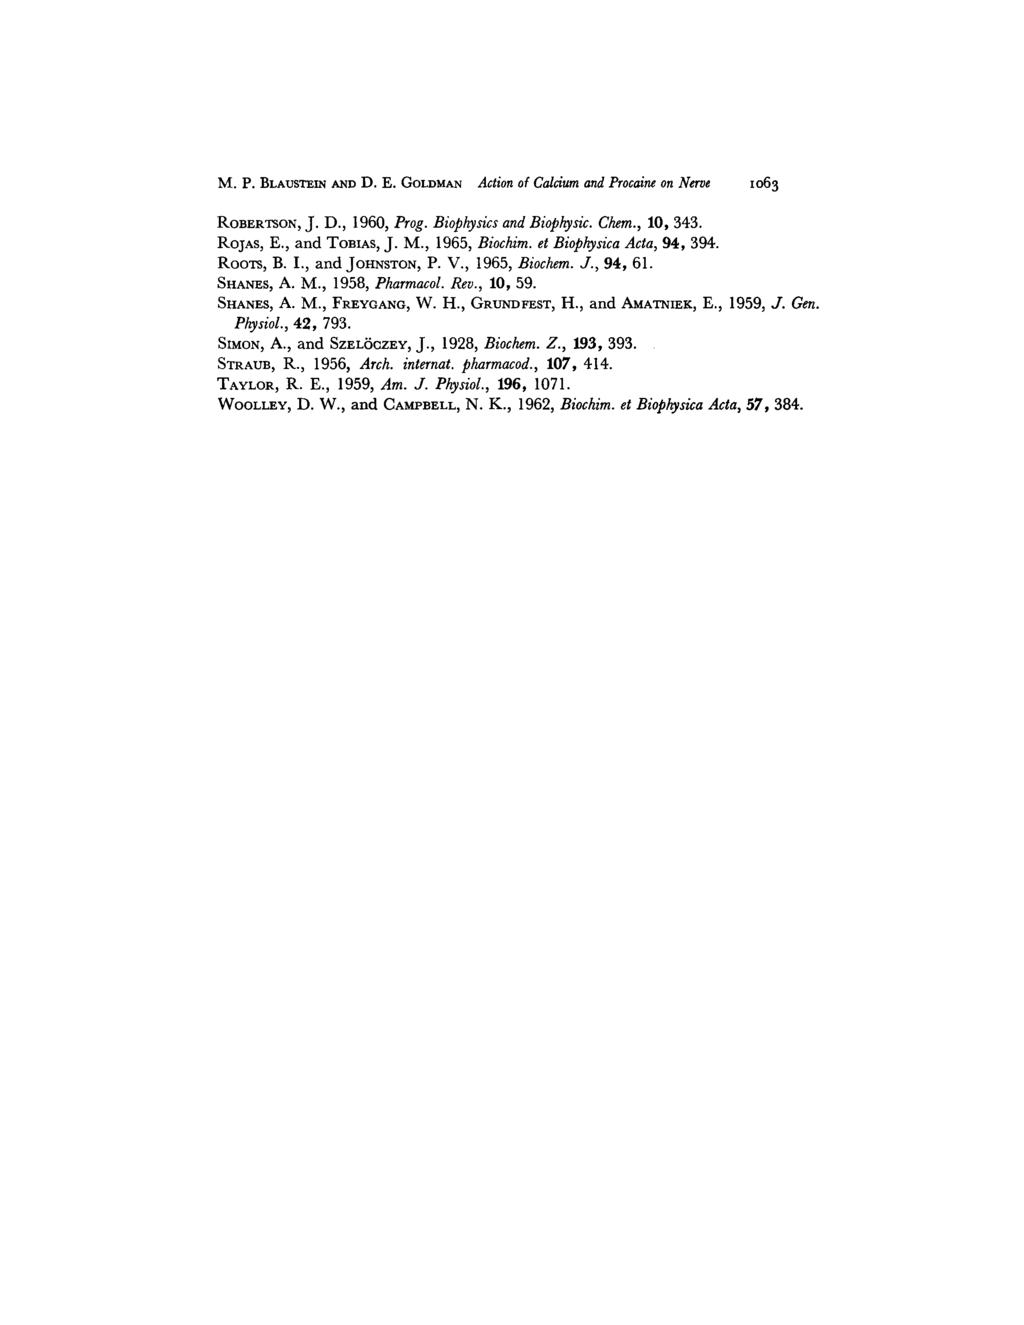 M. P. BLAUSTEIN AND D. E. GOLDMAN Action of Caldum and Procaine on Nerve io63 ROBERTSON, J. D., 1960, Prog. Biophysics and Biophysic. Chem., 10, 343. RojAs, E., and TOBIAS, J. M., 1965, Biochim.